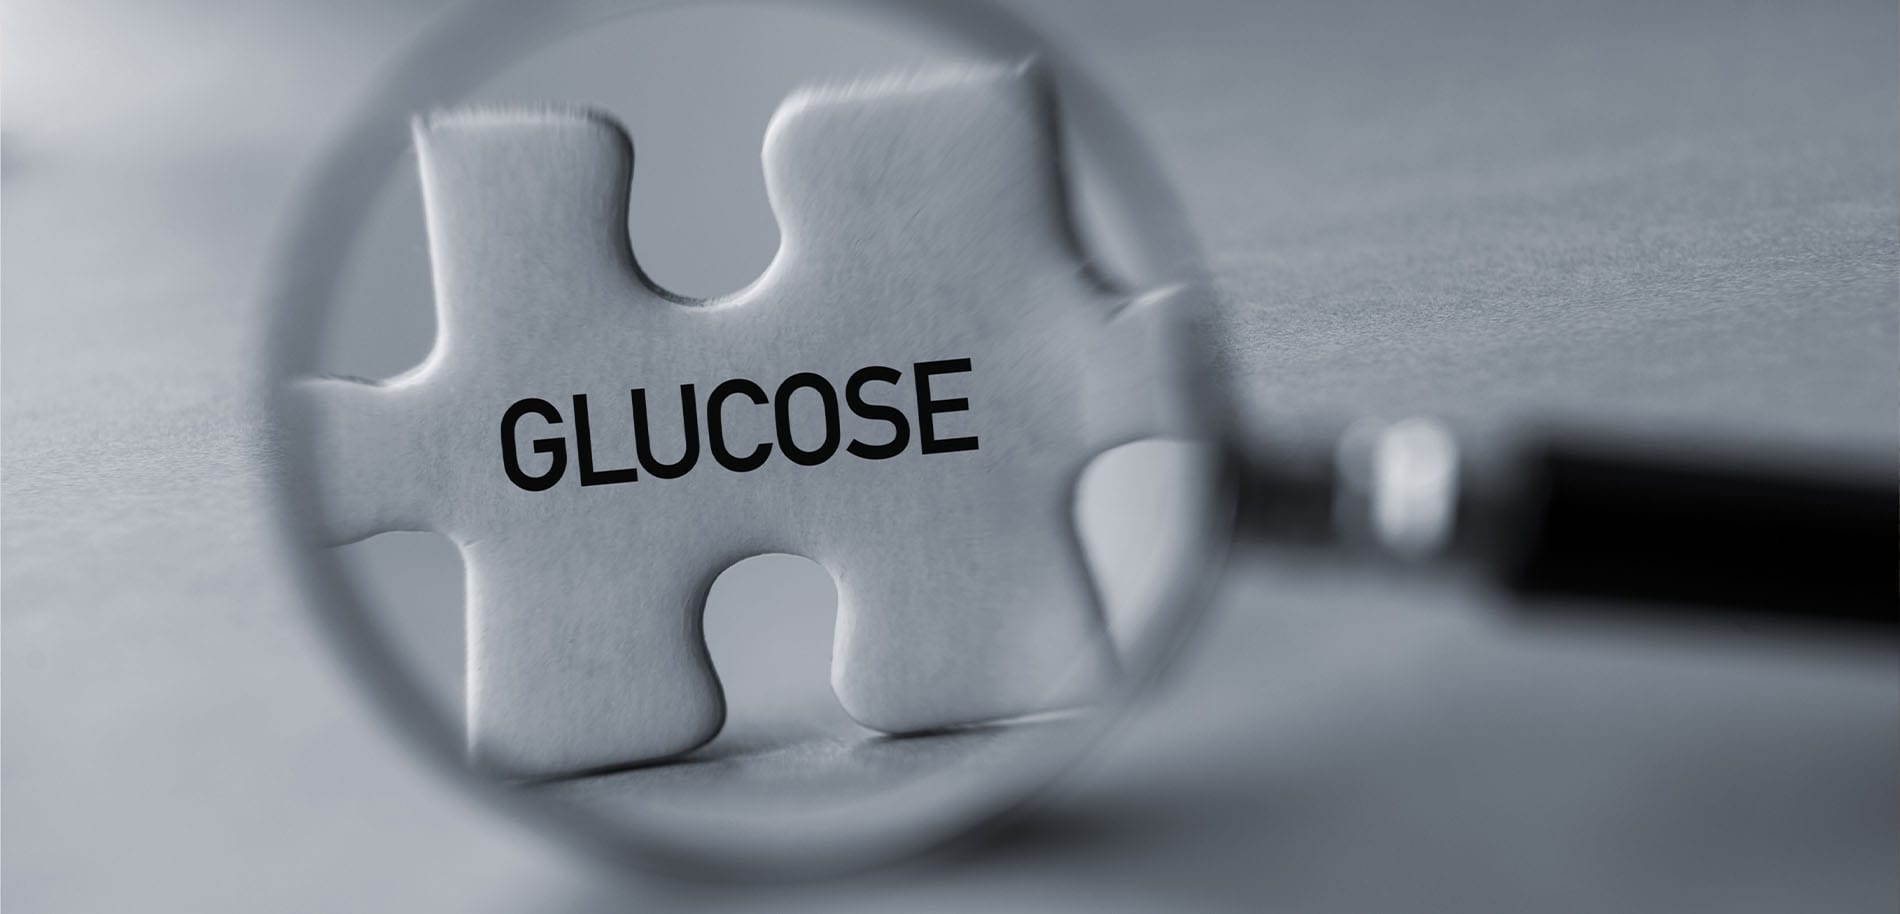 Glucose: The Hidden Culprit Behind Accelerated Aging